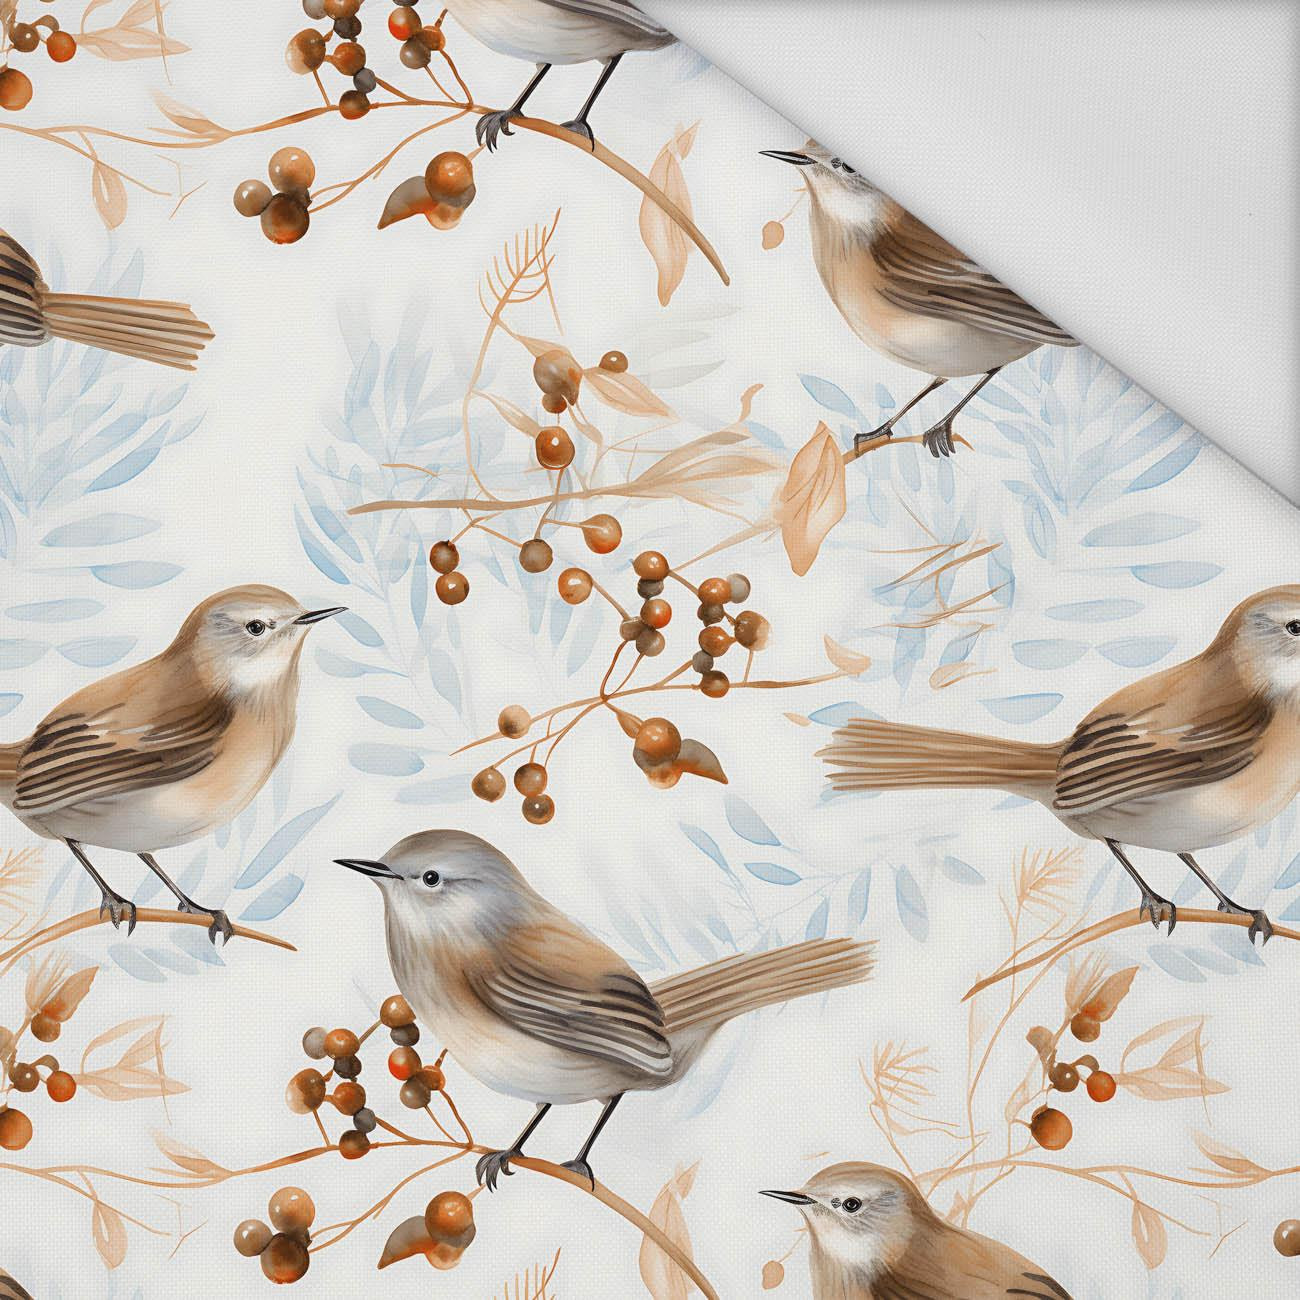 PASTEL BIRDS PAT. 1 - Waterproof woven fabric